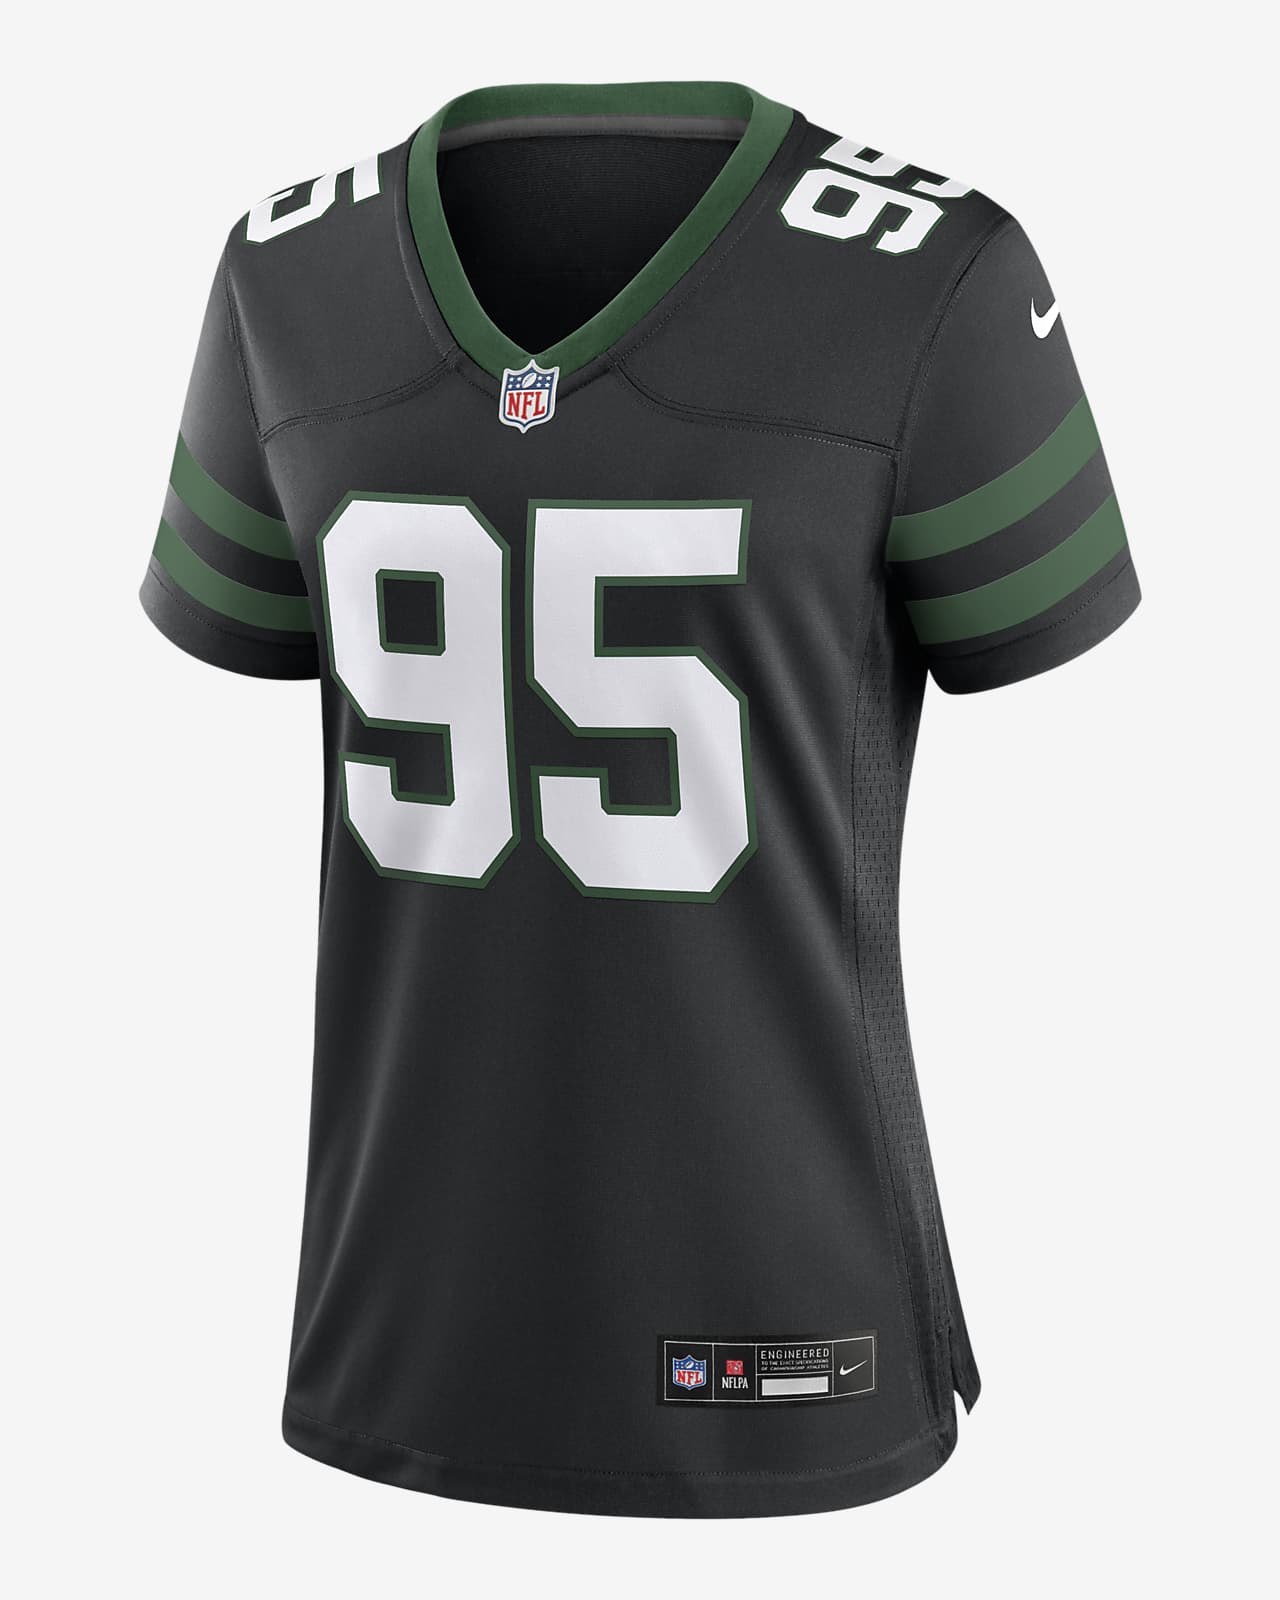 Jersey de fútbol americano Nike de la NFL Game para mujer Quinnen Williams New York Jets